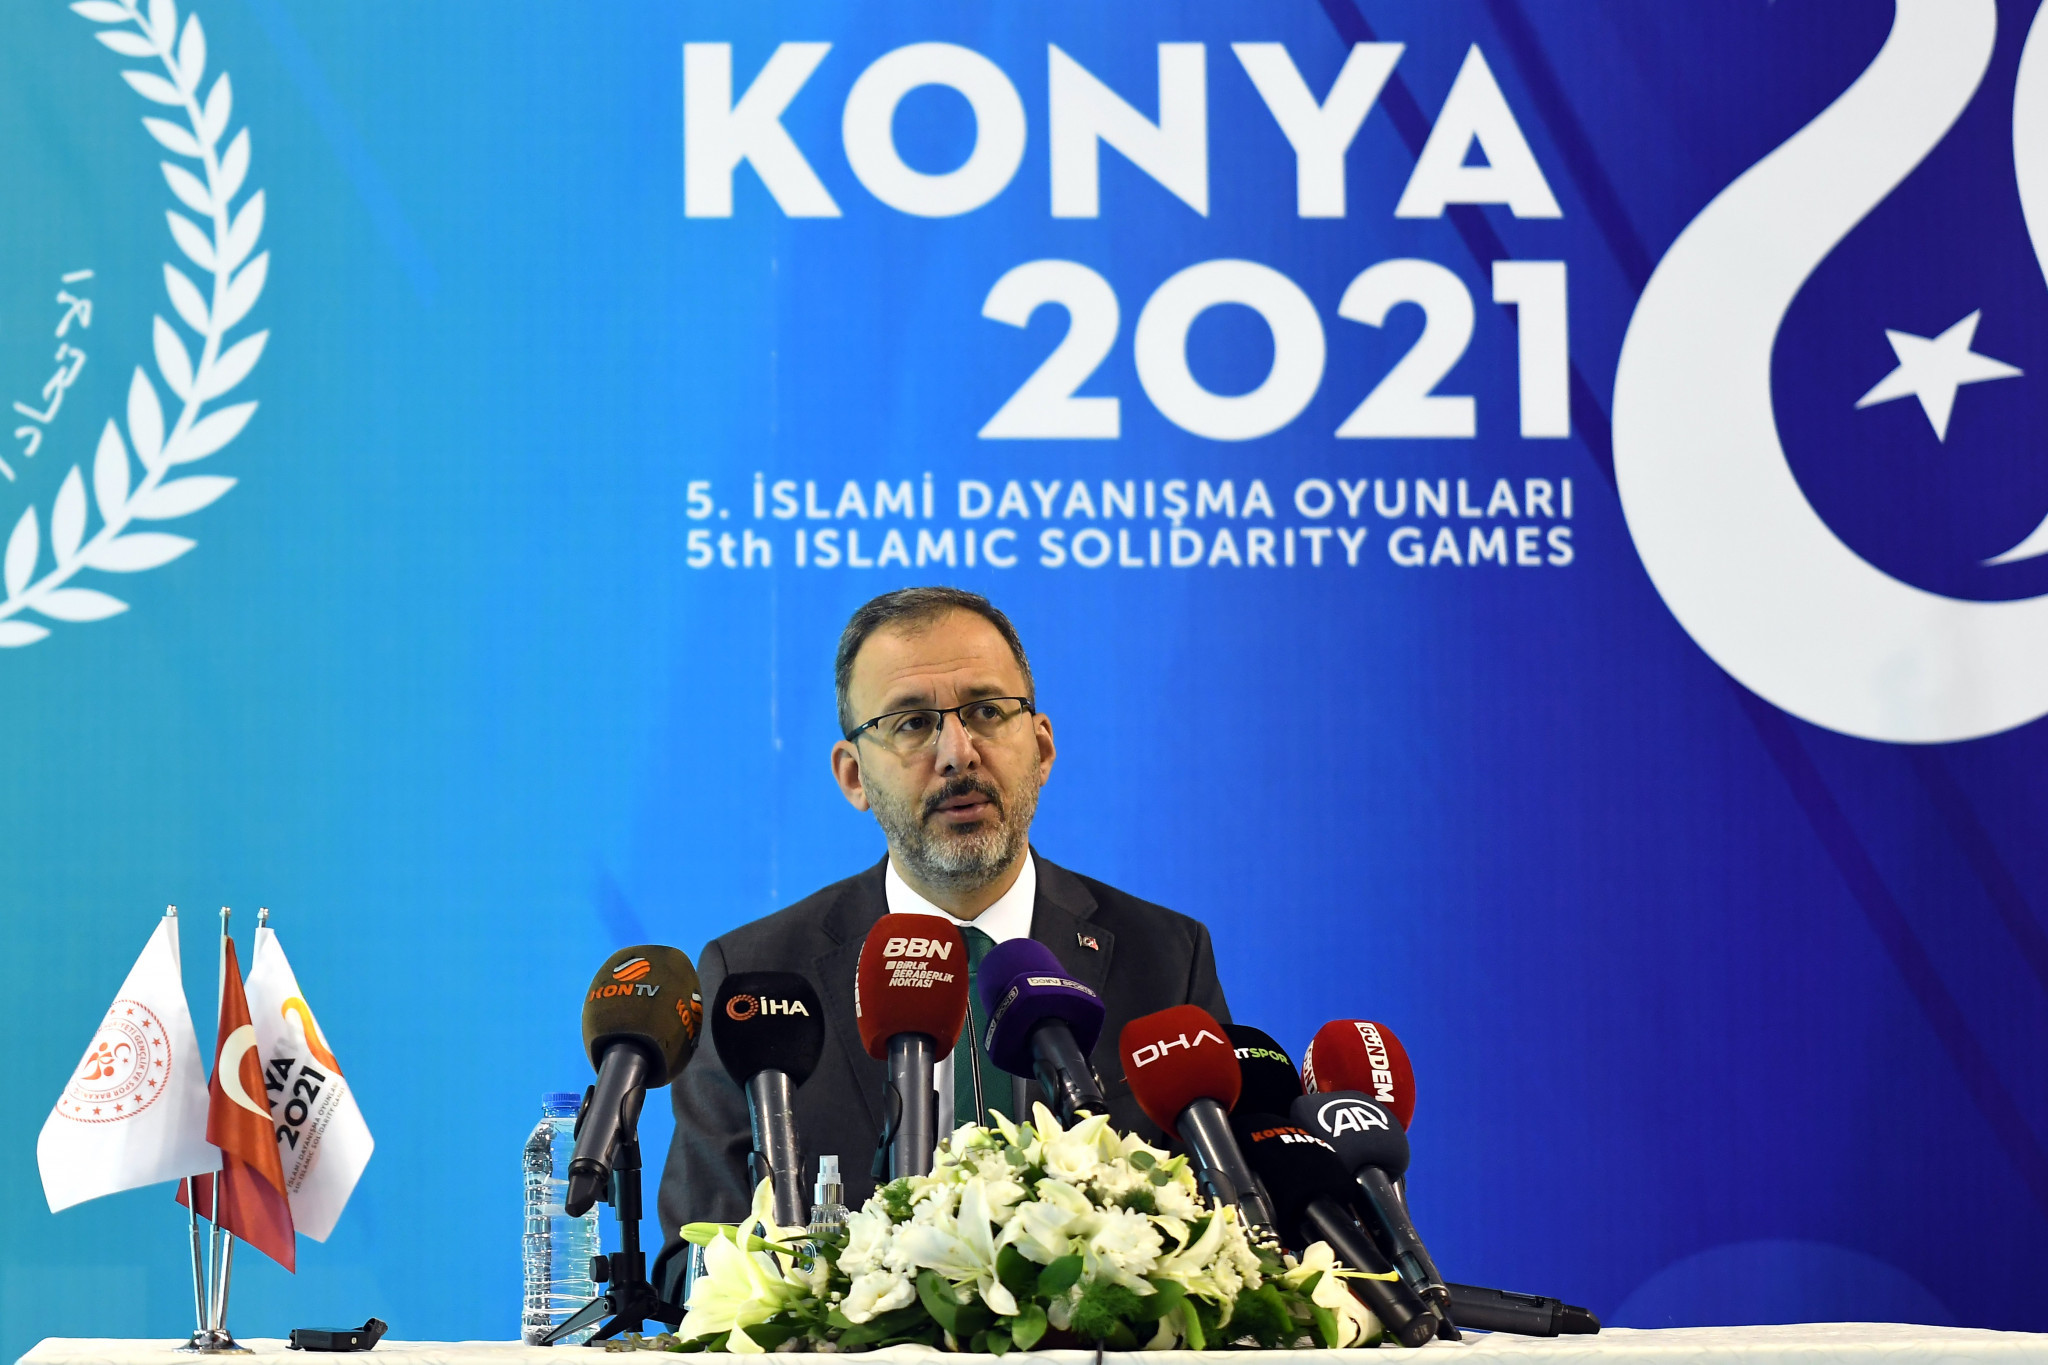 Kasapoğlu claims Turkey “raised the bar” for Islamic Solidarity Games